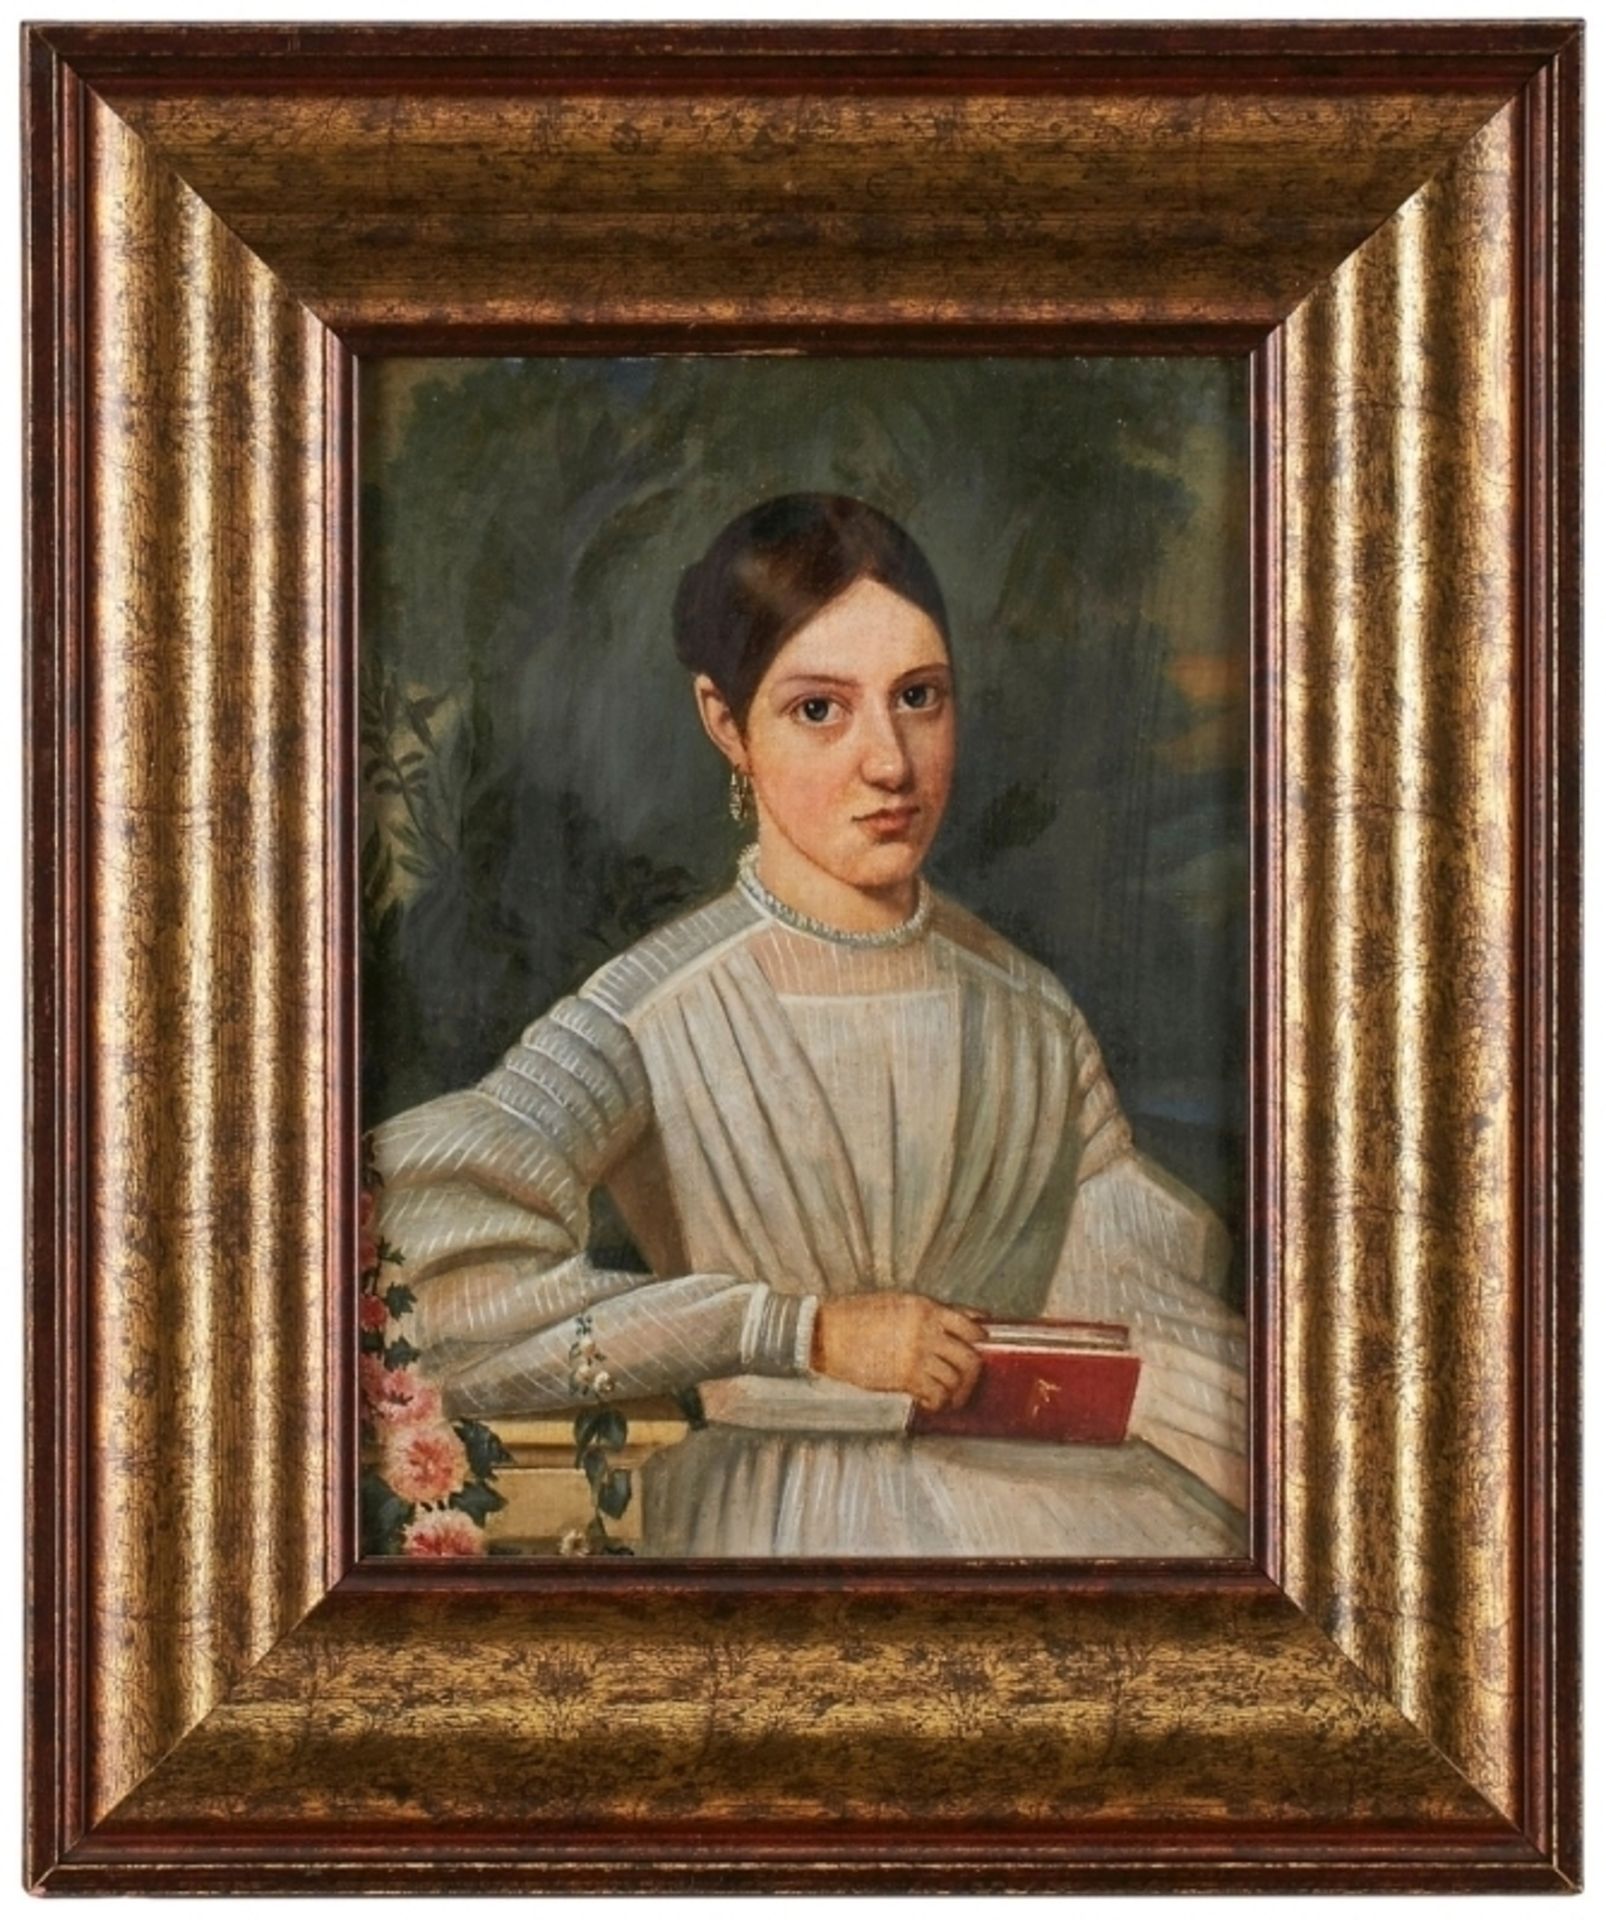 Gemälde Bildnismaler um 1850 "Sitzende